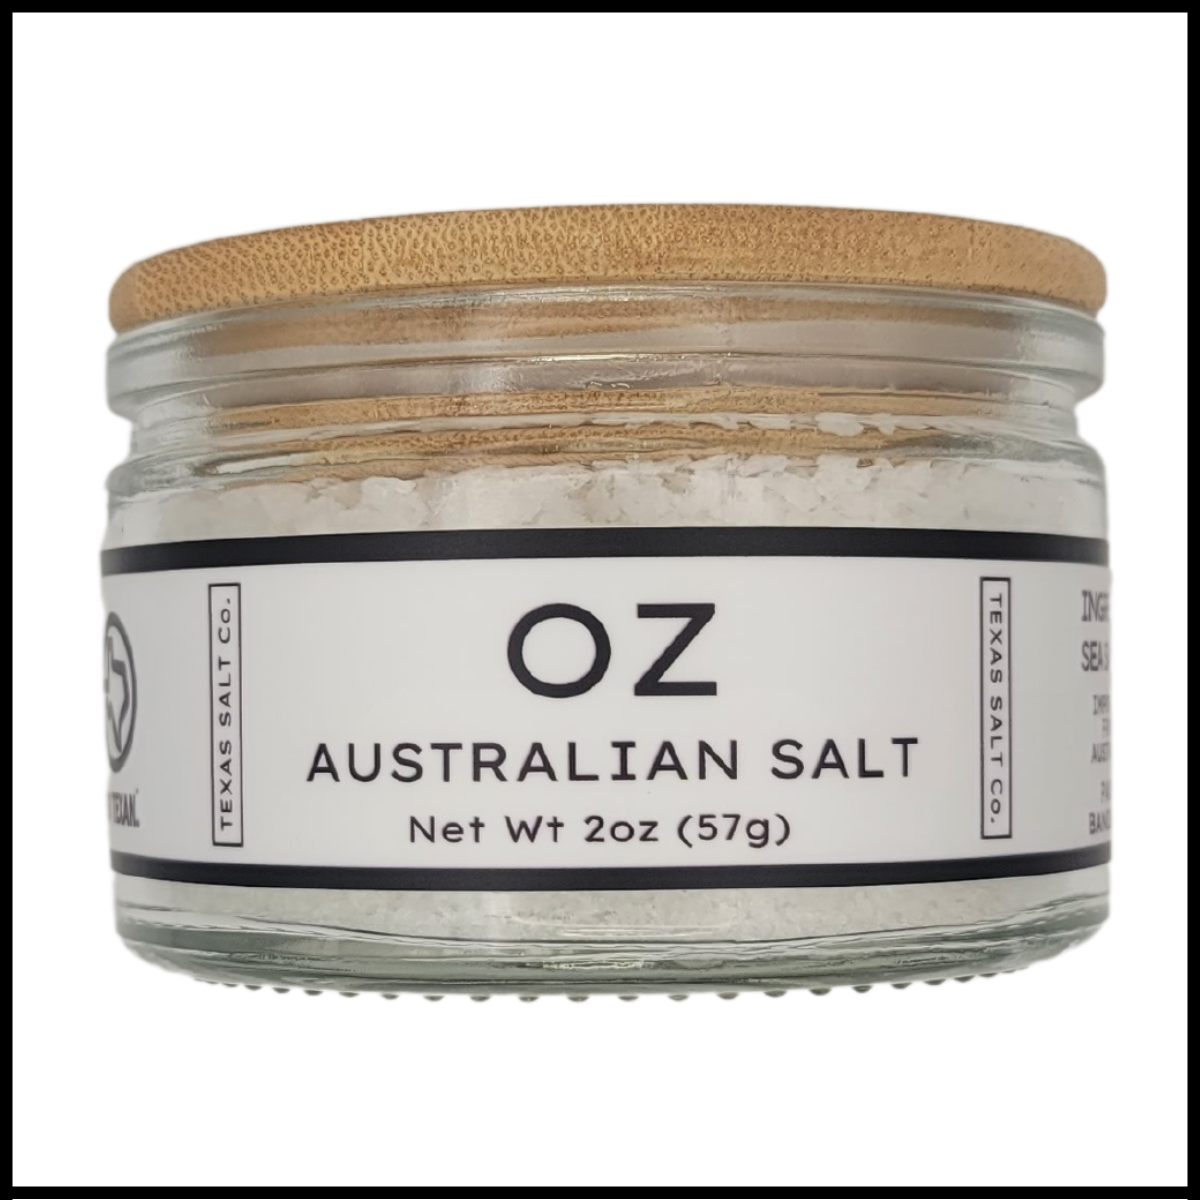 oz australian salt easy pinch jar